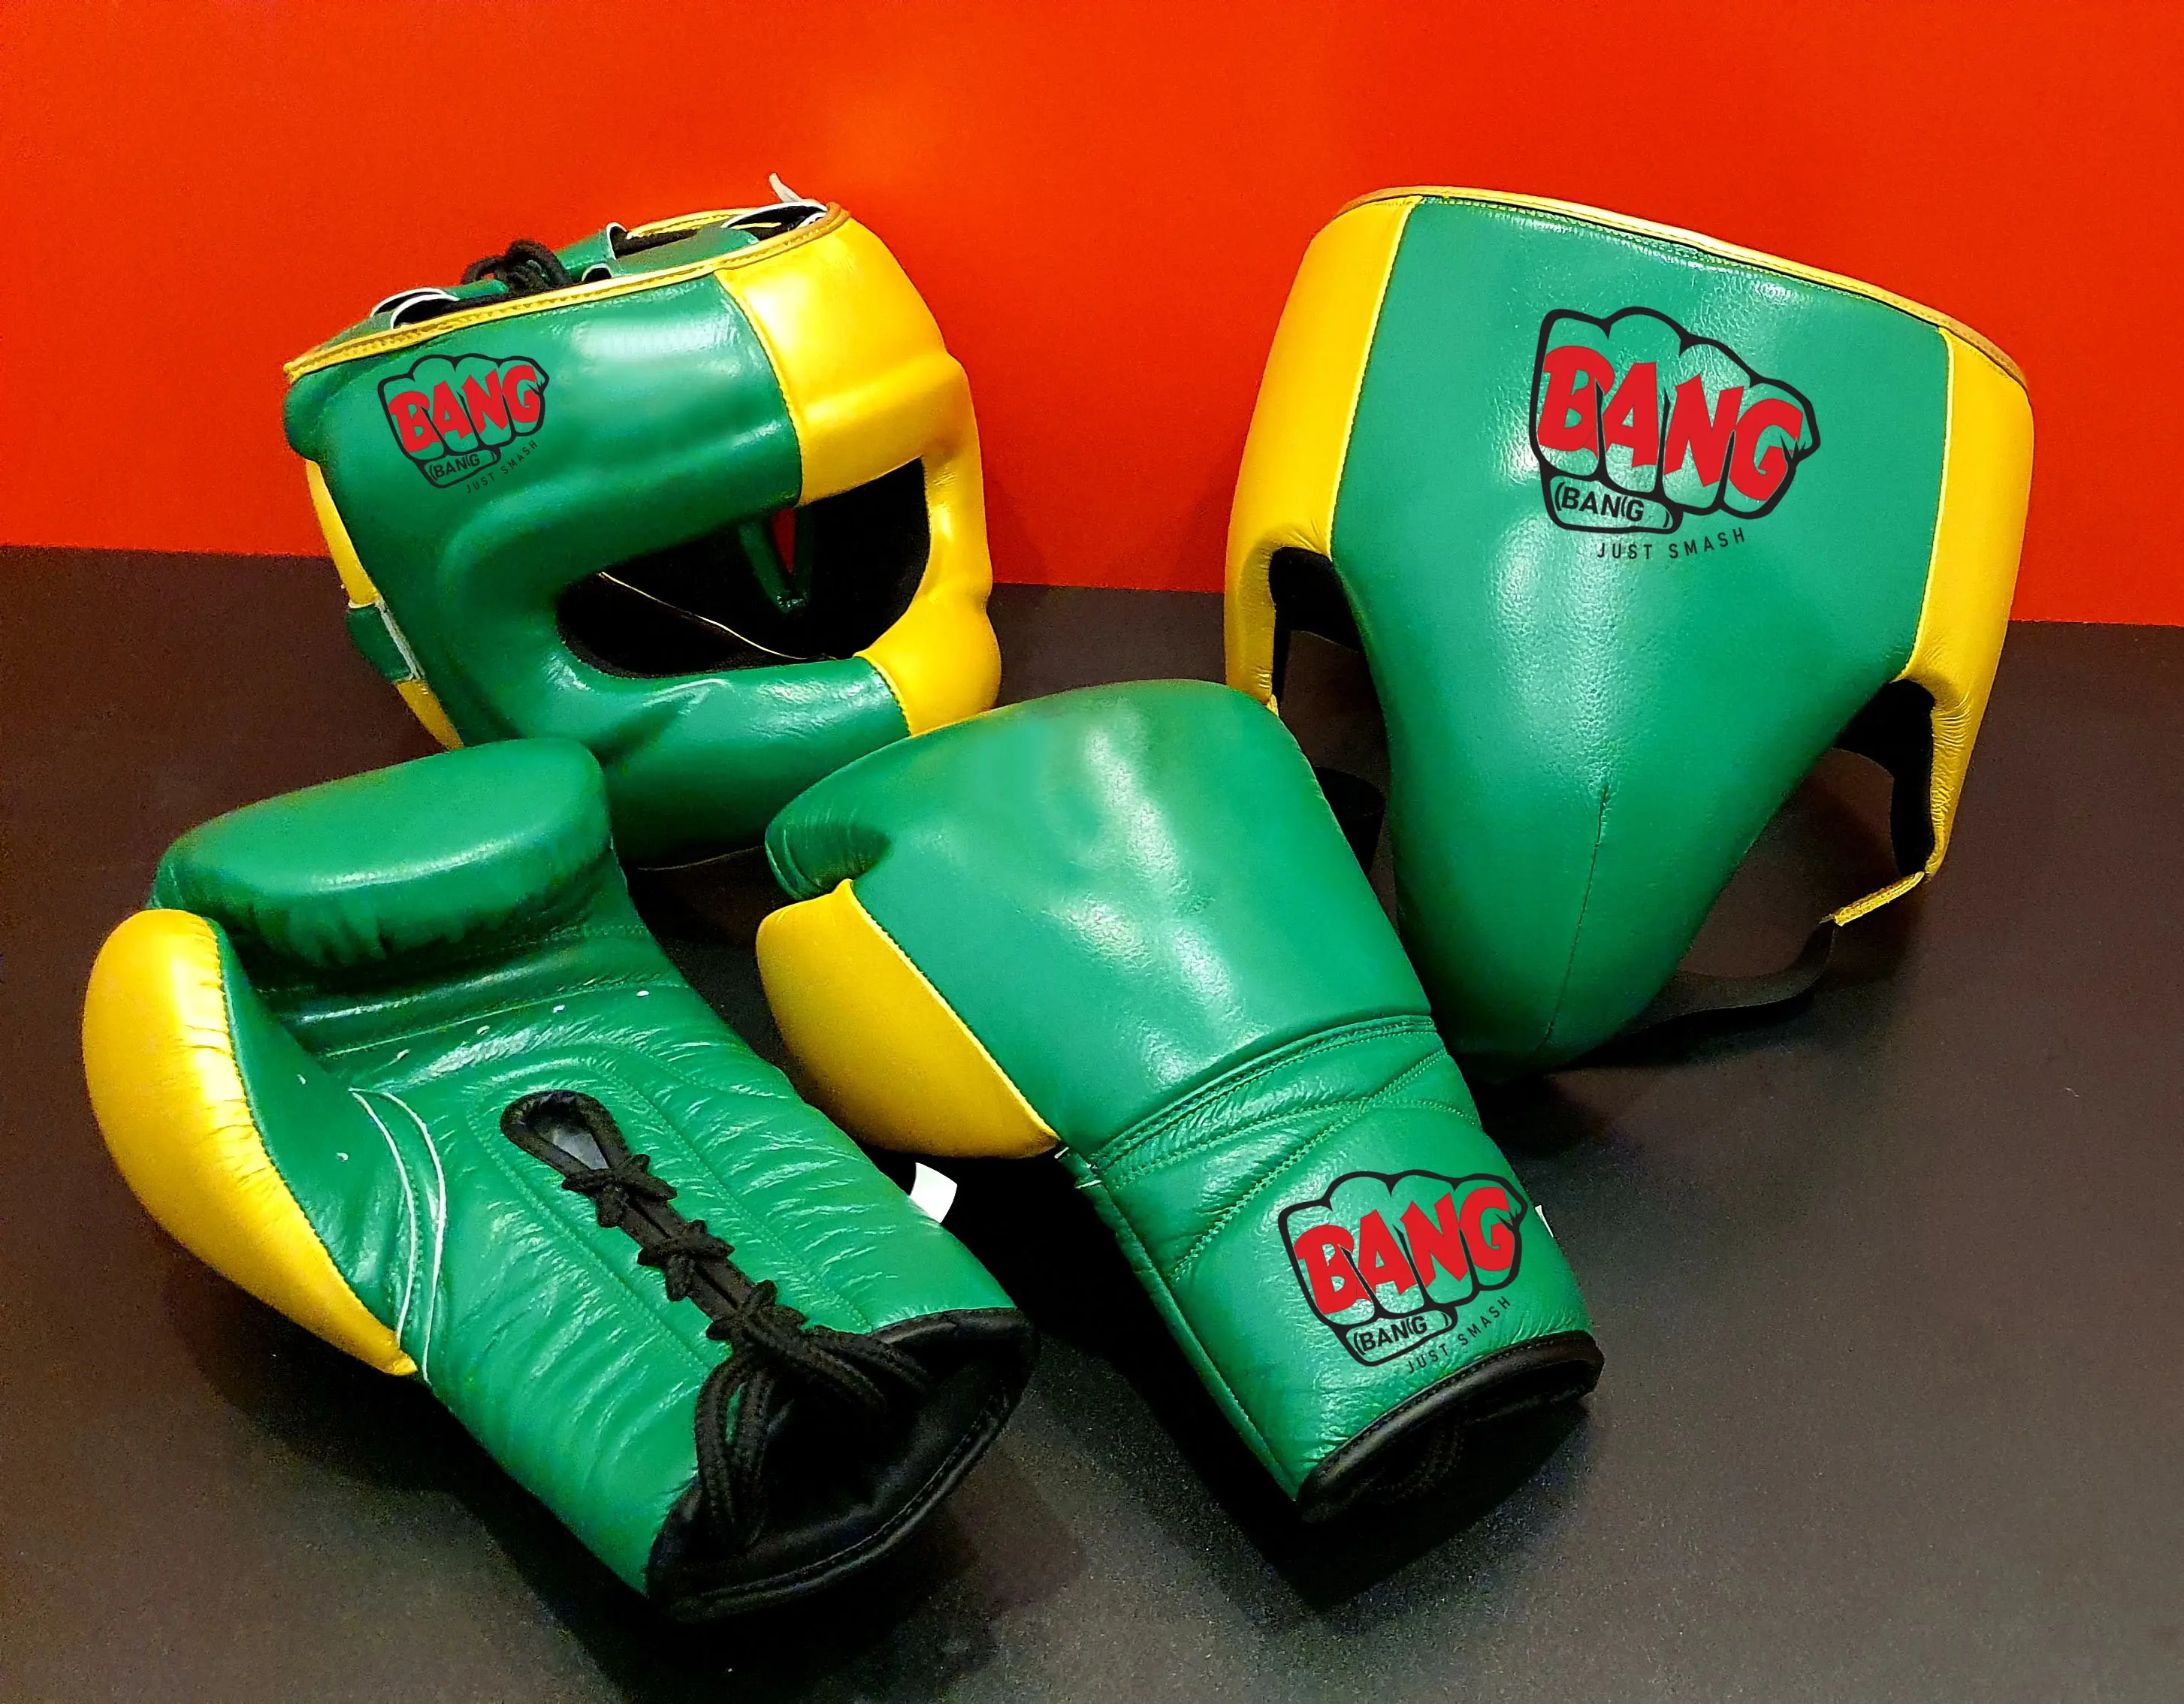 Luvas de couro real para boxe, luva com design personalizado de mma, bolsa de grappling para treino de kickboxing e luta